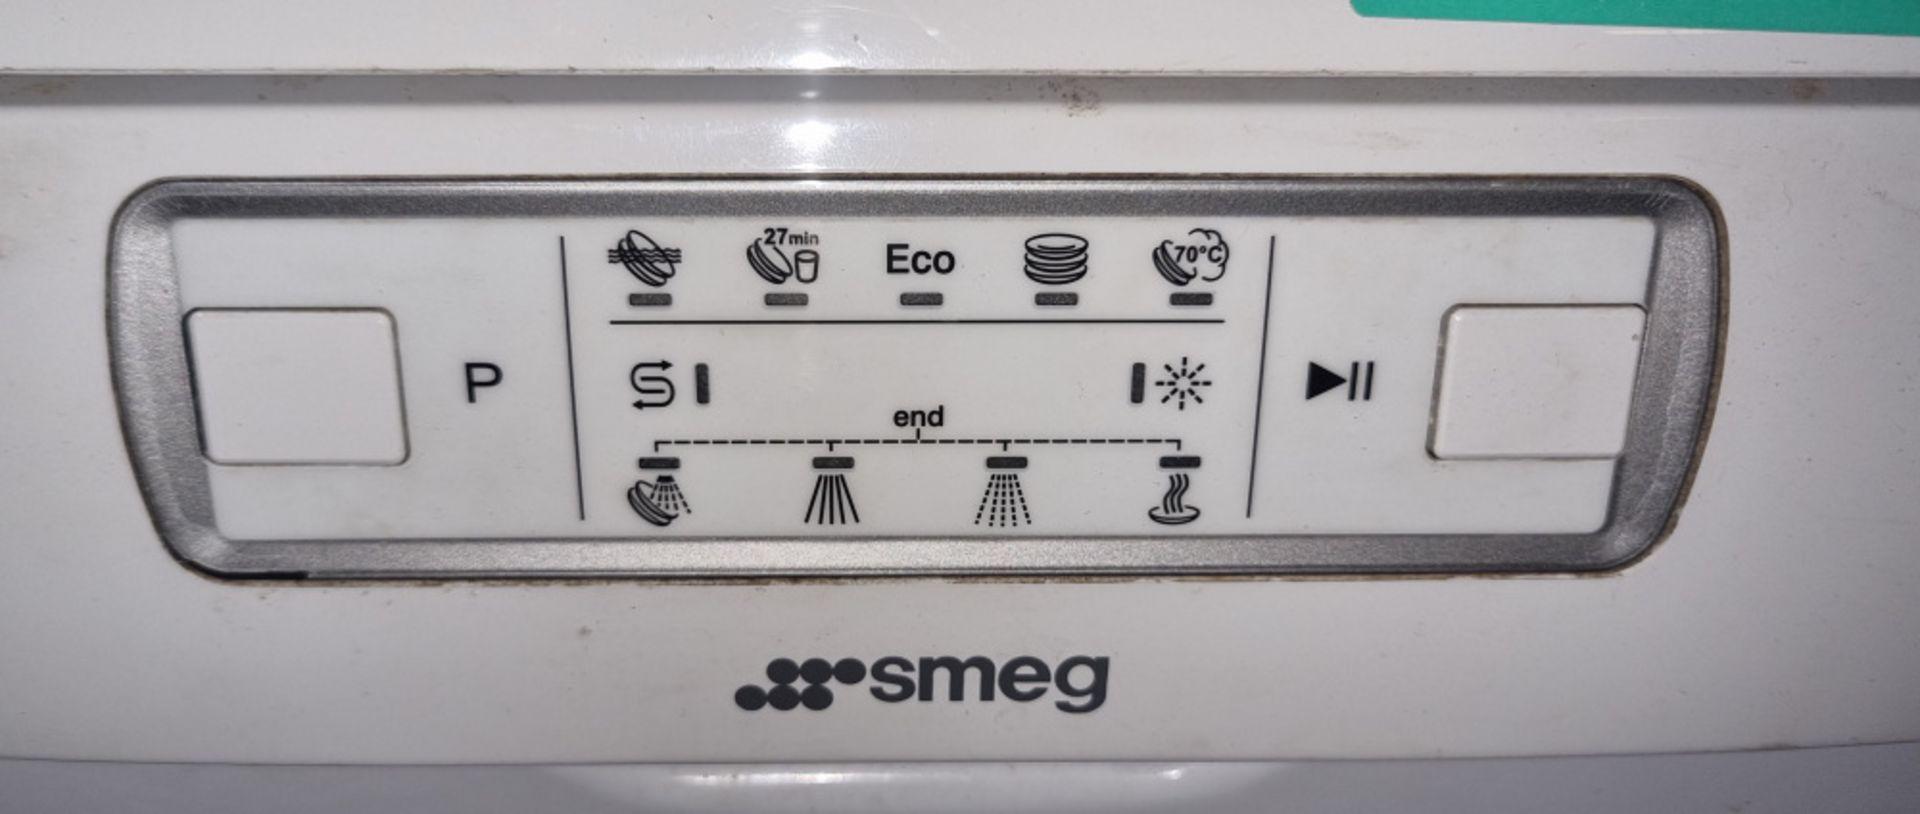 Smeg Dishwasher - L600 x D600 x H850mm - Image 3 of 7